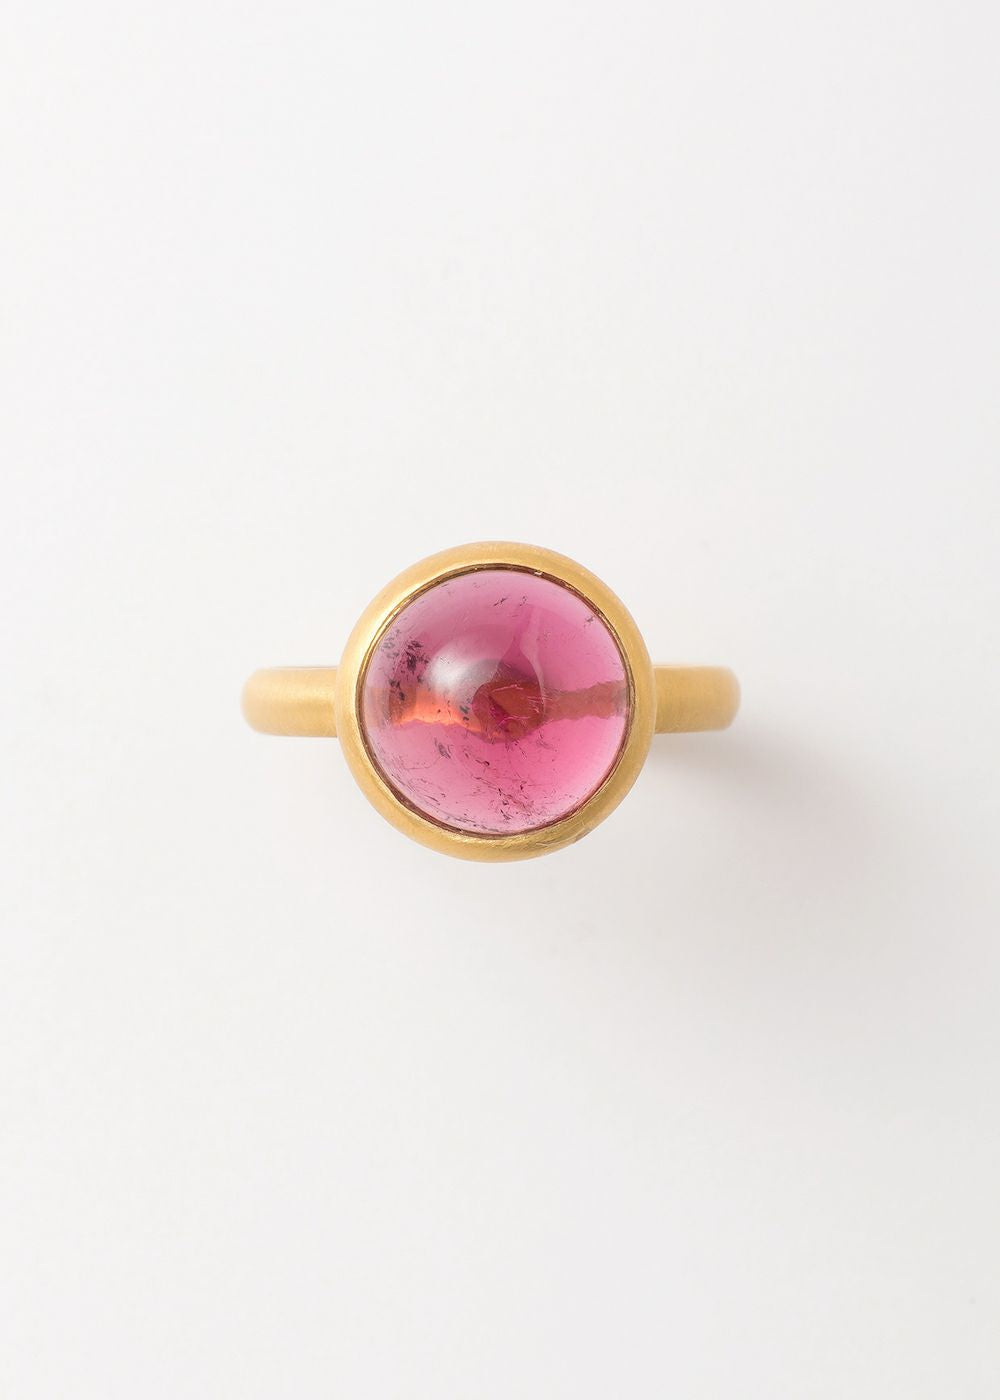 Pink Tourmarine Cabochon Bezel Ring